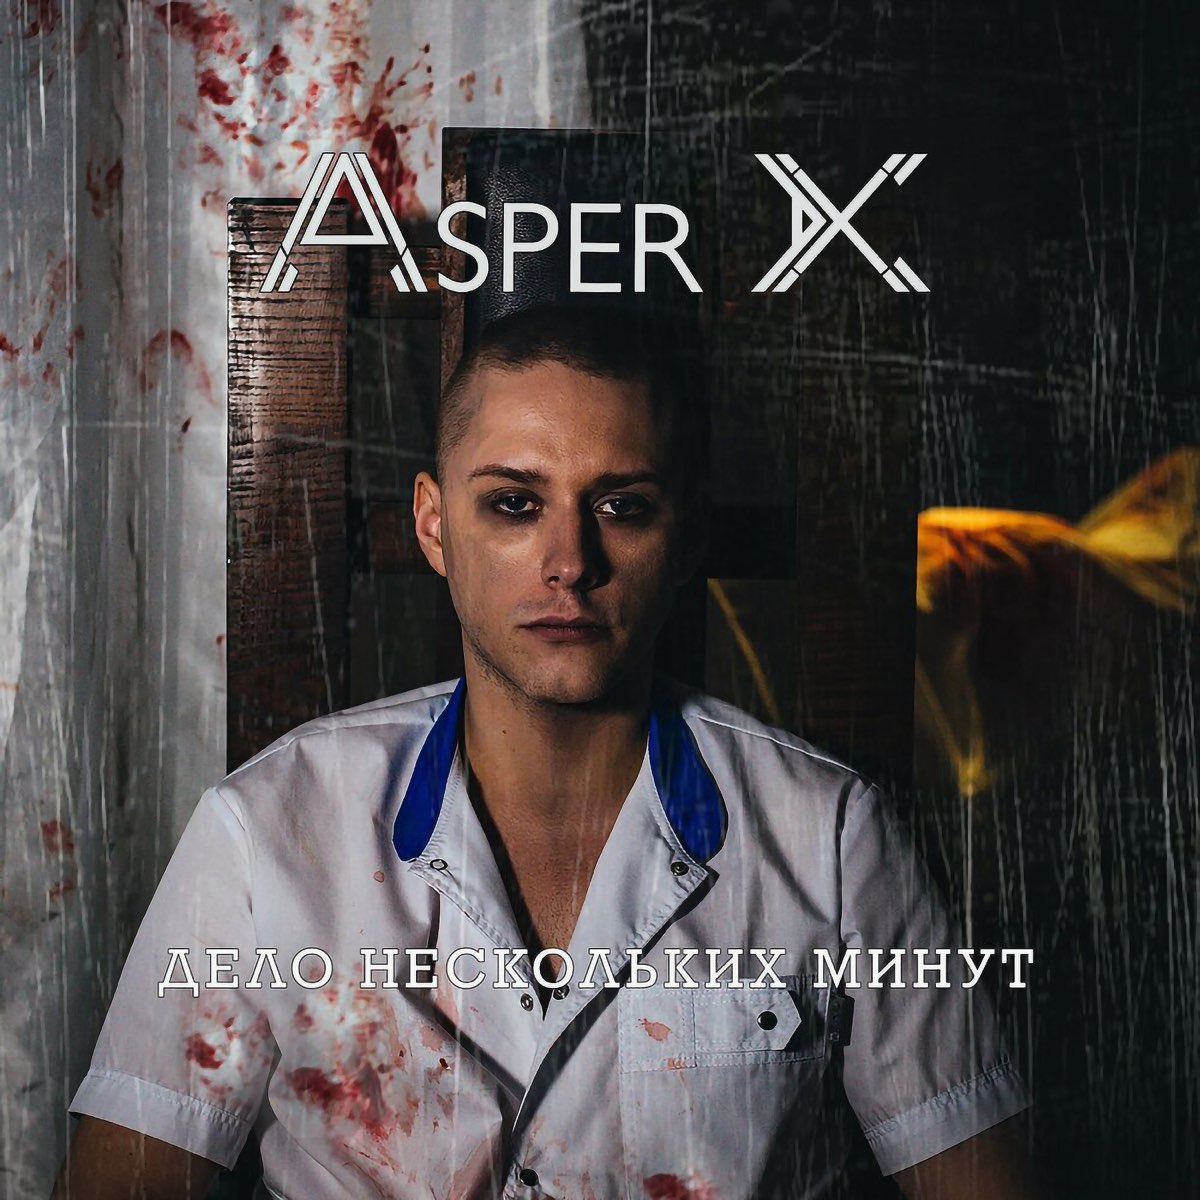 Asper x пей лечись люби. Певец Asper. Asper x дело нескольких минут. Asper x тим Эрна. Аспер Икс обложка альбома.